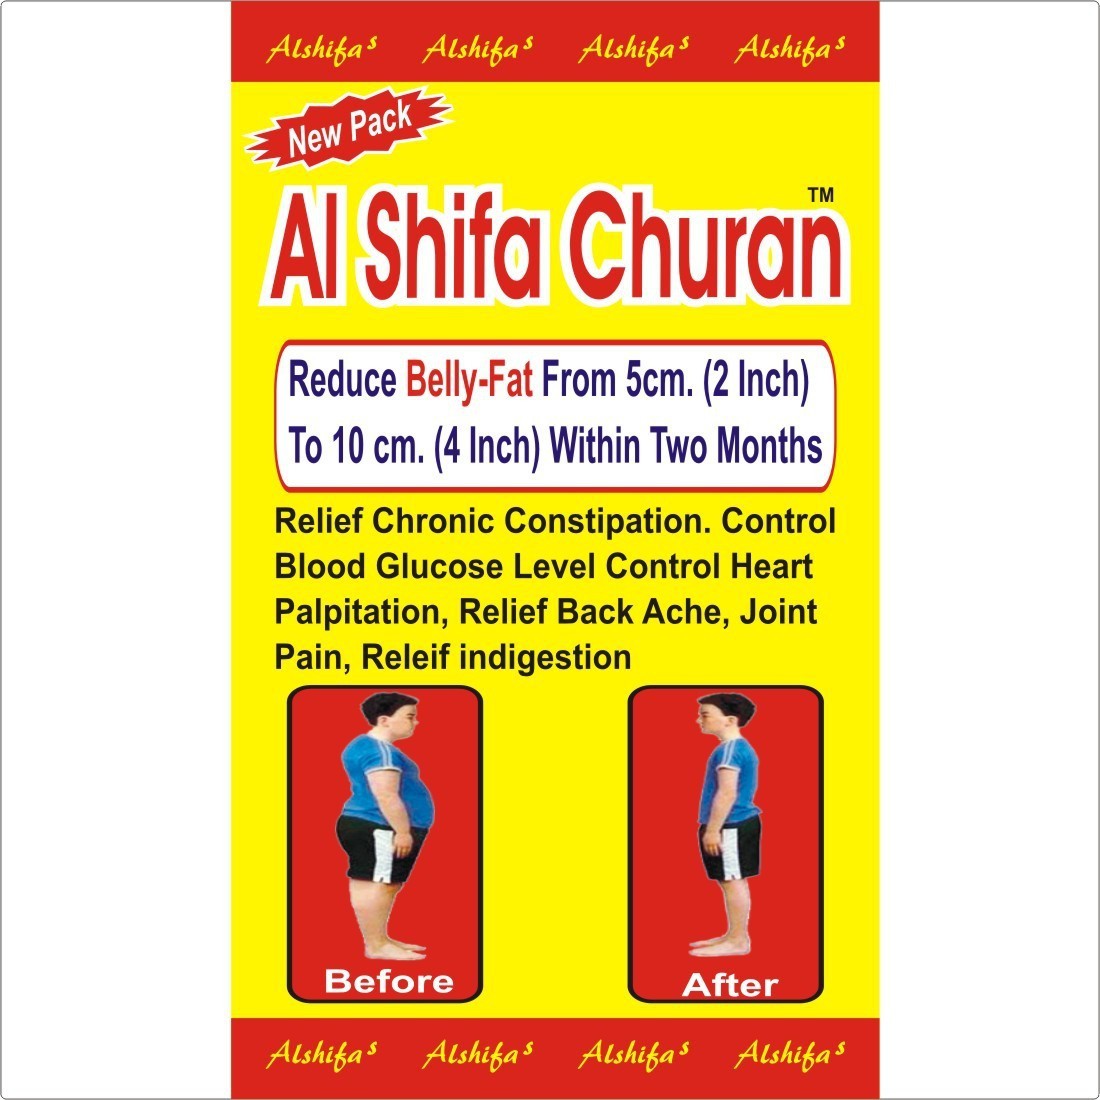 Fat Reducer & Alshifa Churan combo pack